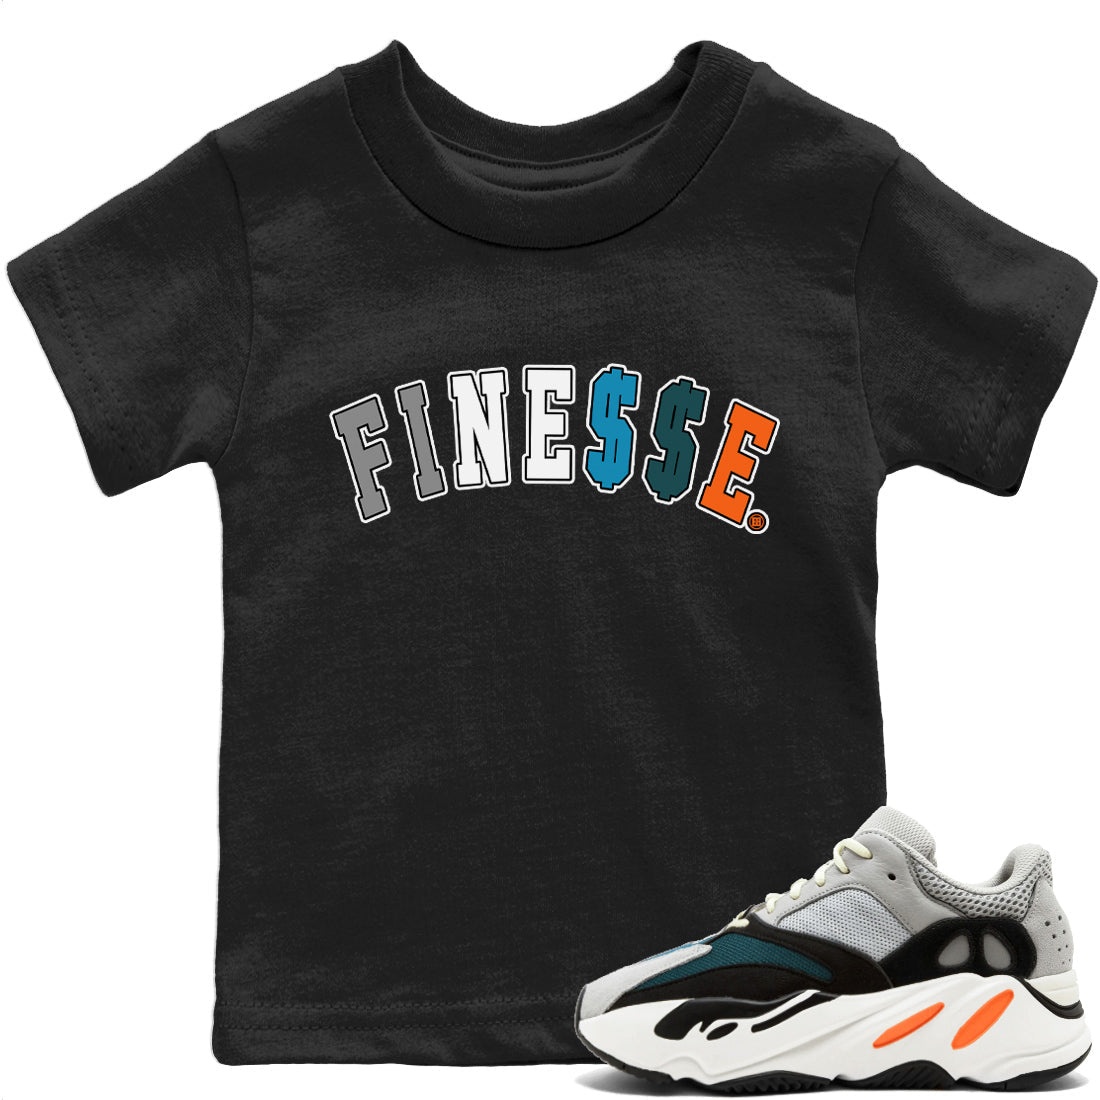 Yeezy 700 Wave Runner Sneaker Match Tees Finesse Sneaker Tees Yeezy 700 Wave Runner Sneaker Release Tees Kids Shirts